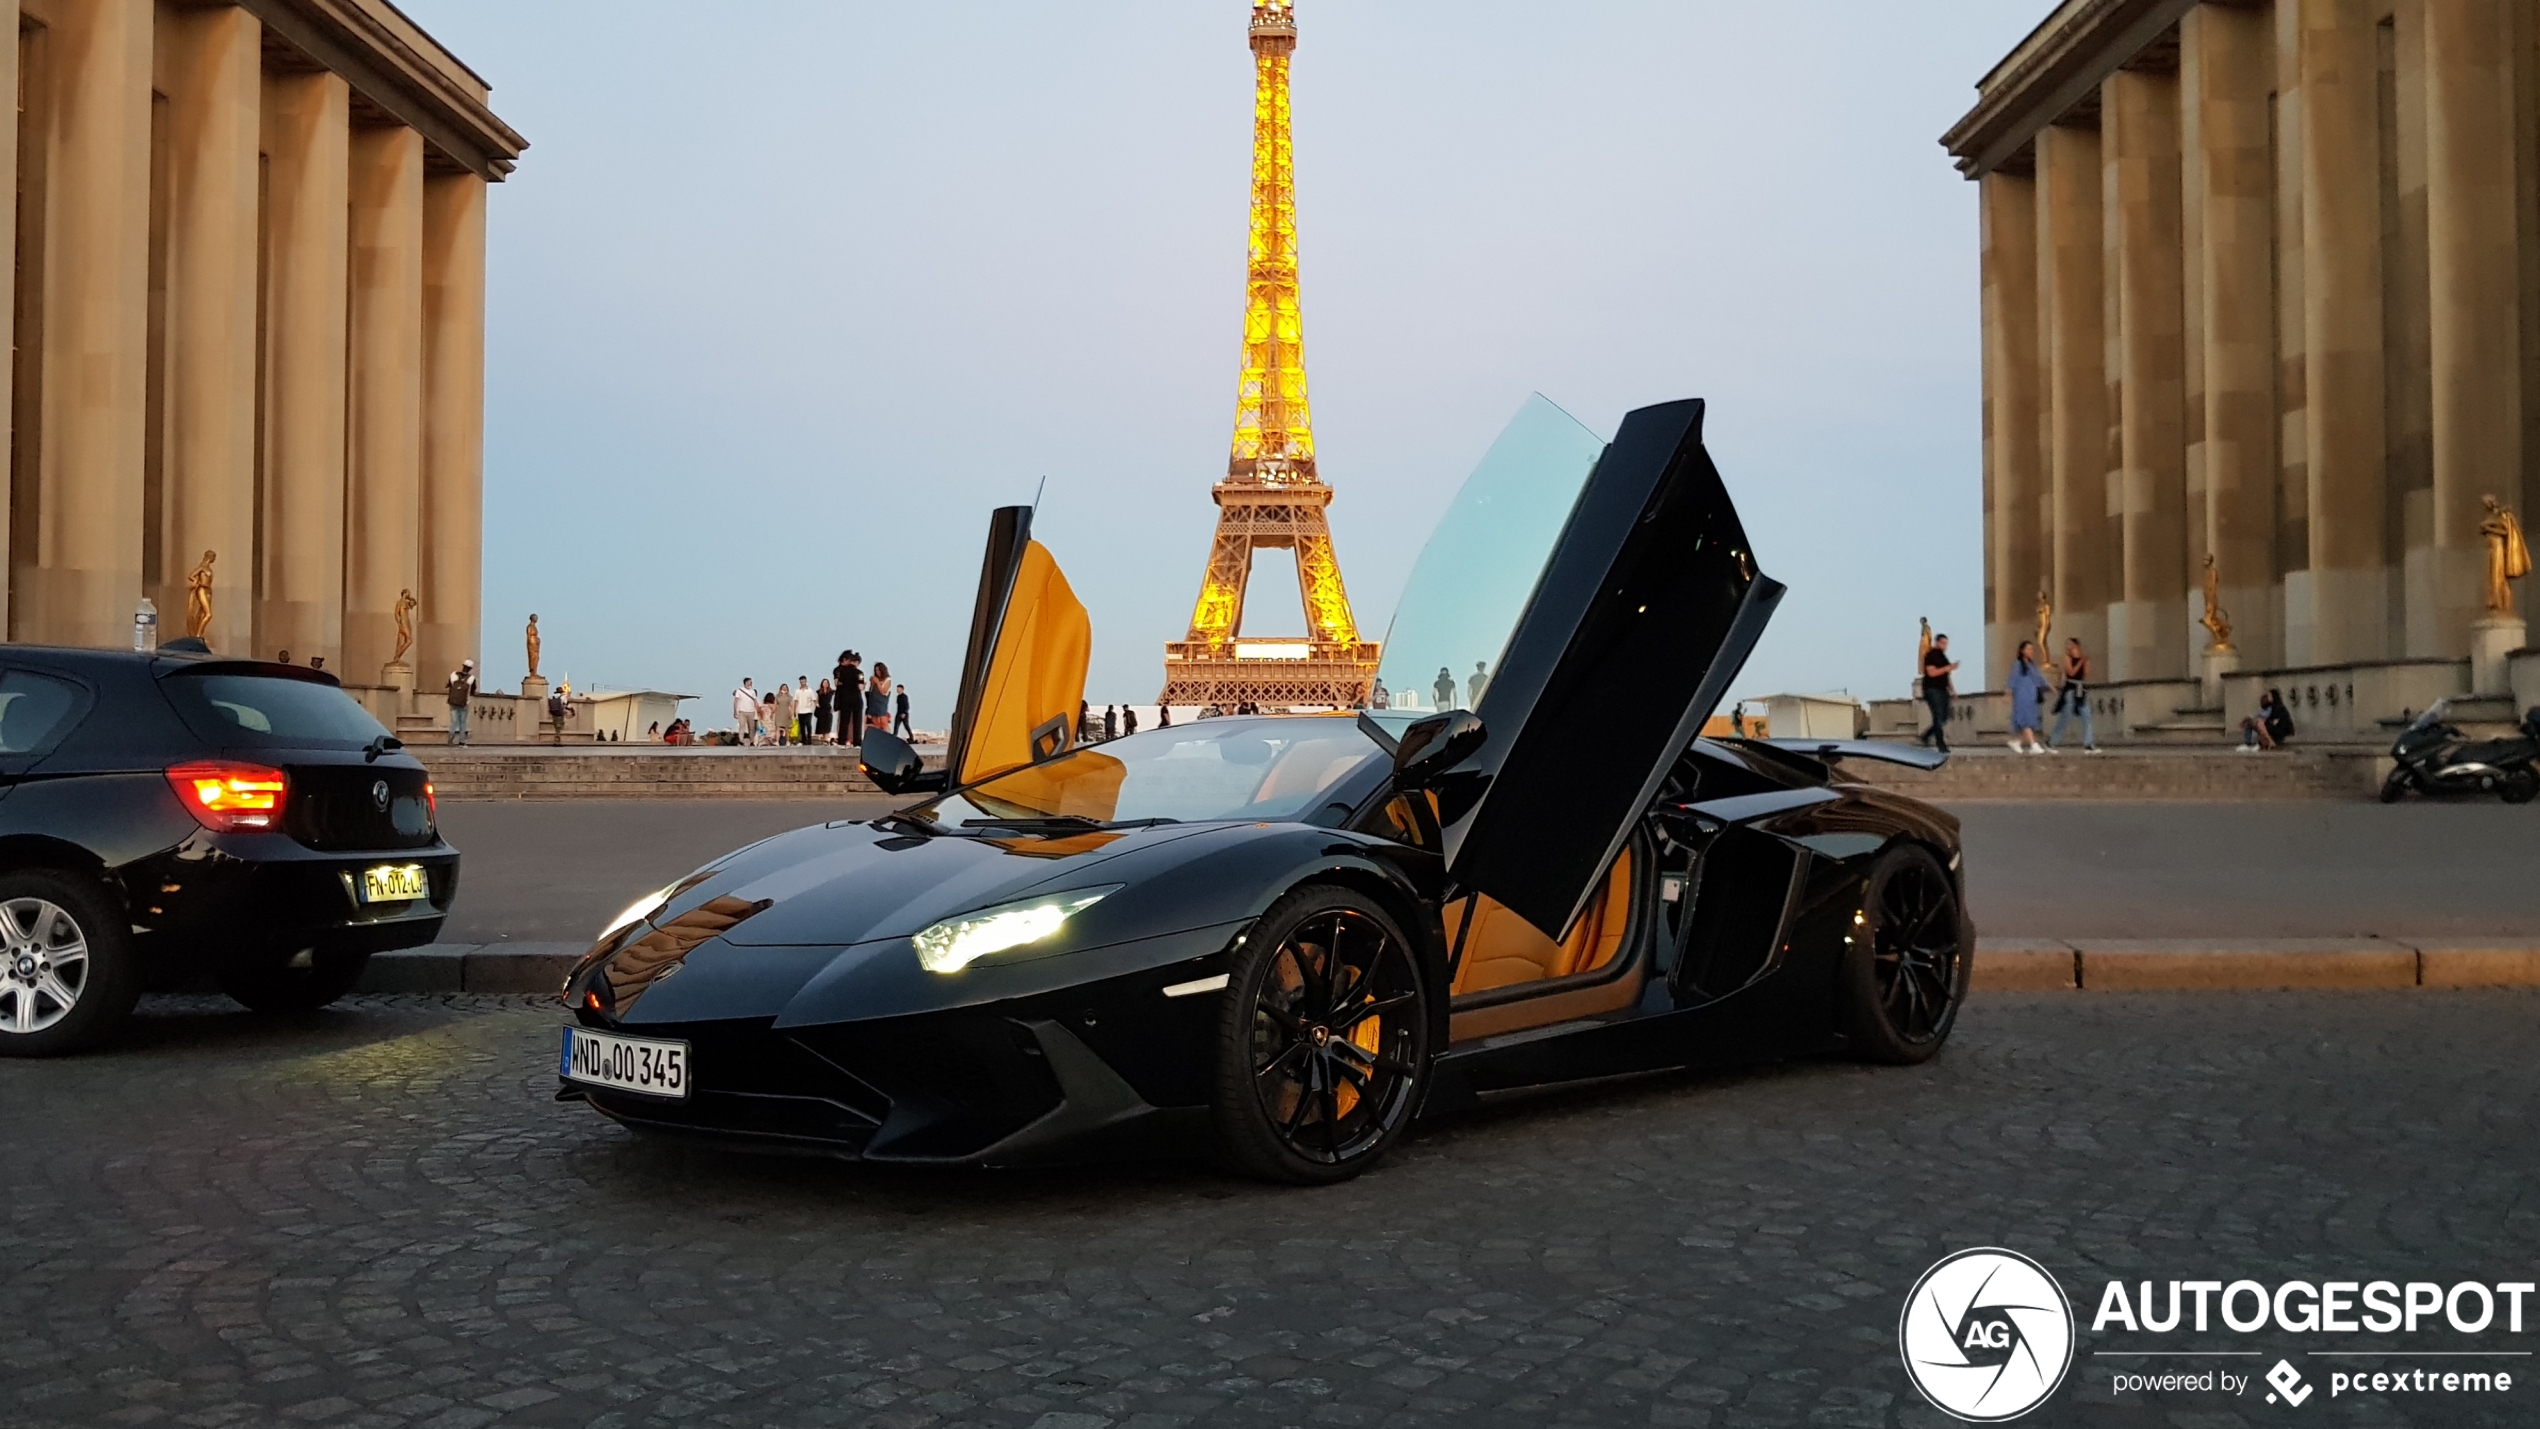 Eiffeltoren is prachtig decor achter Lamborghini Aventador LP700-4 Roadster